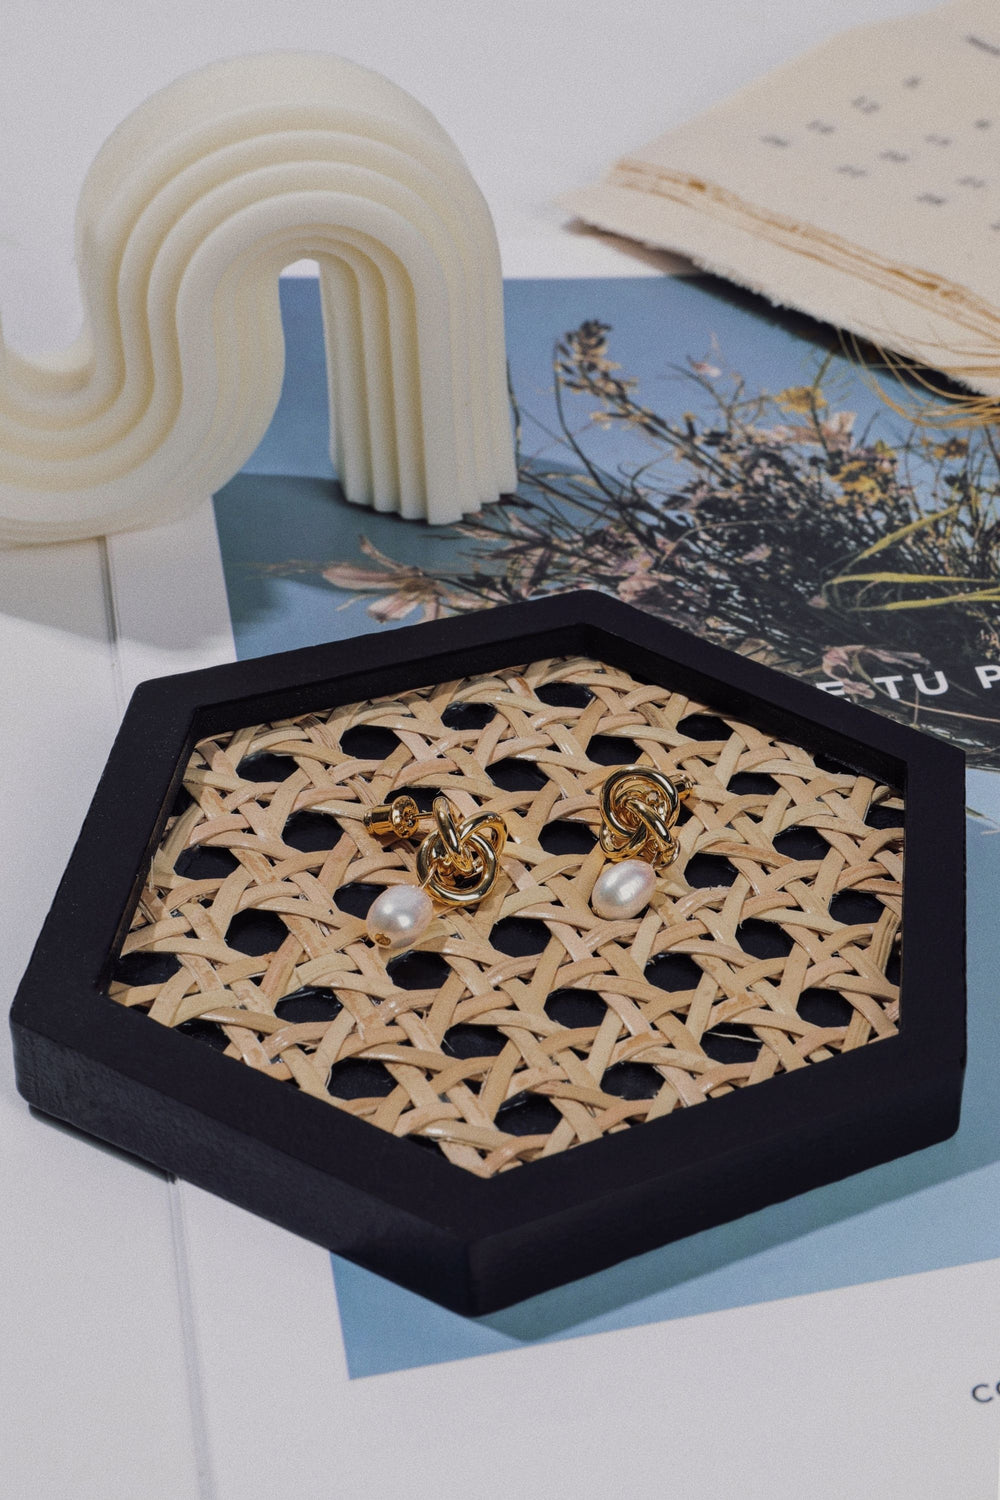 MomentDecor™ Natural Rattan & Wood Coasters Hexagon Shape